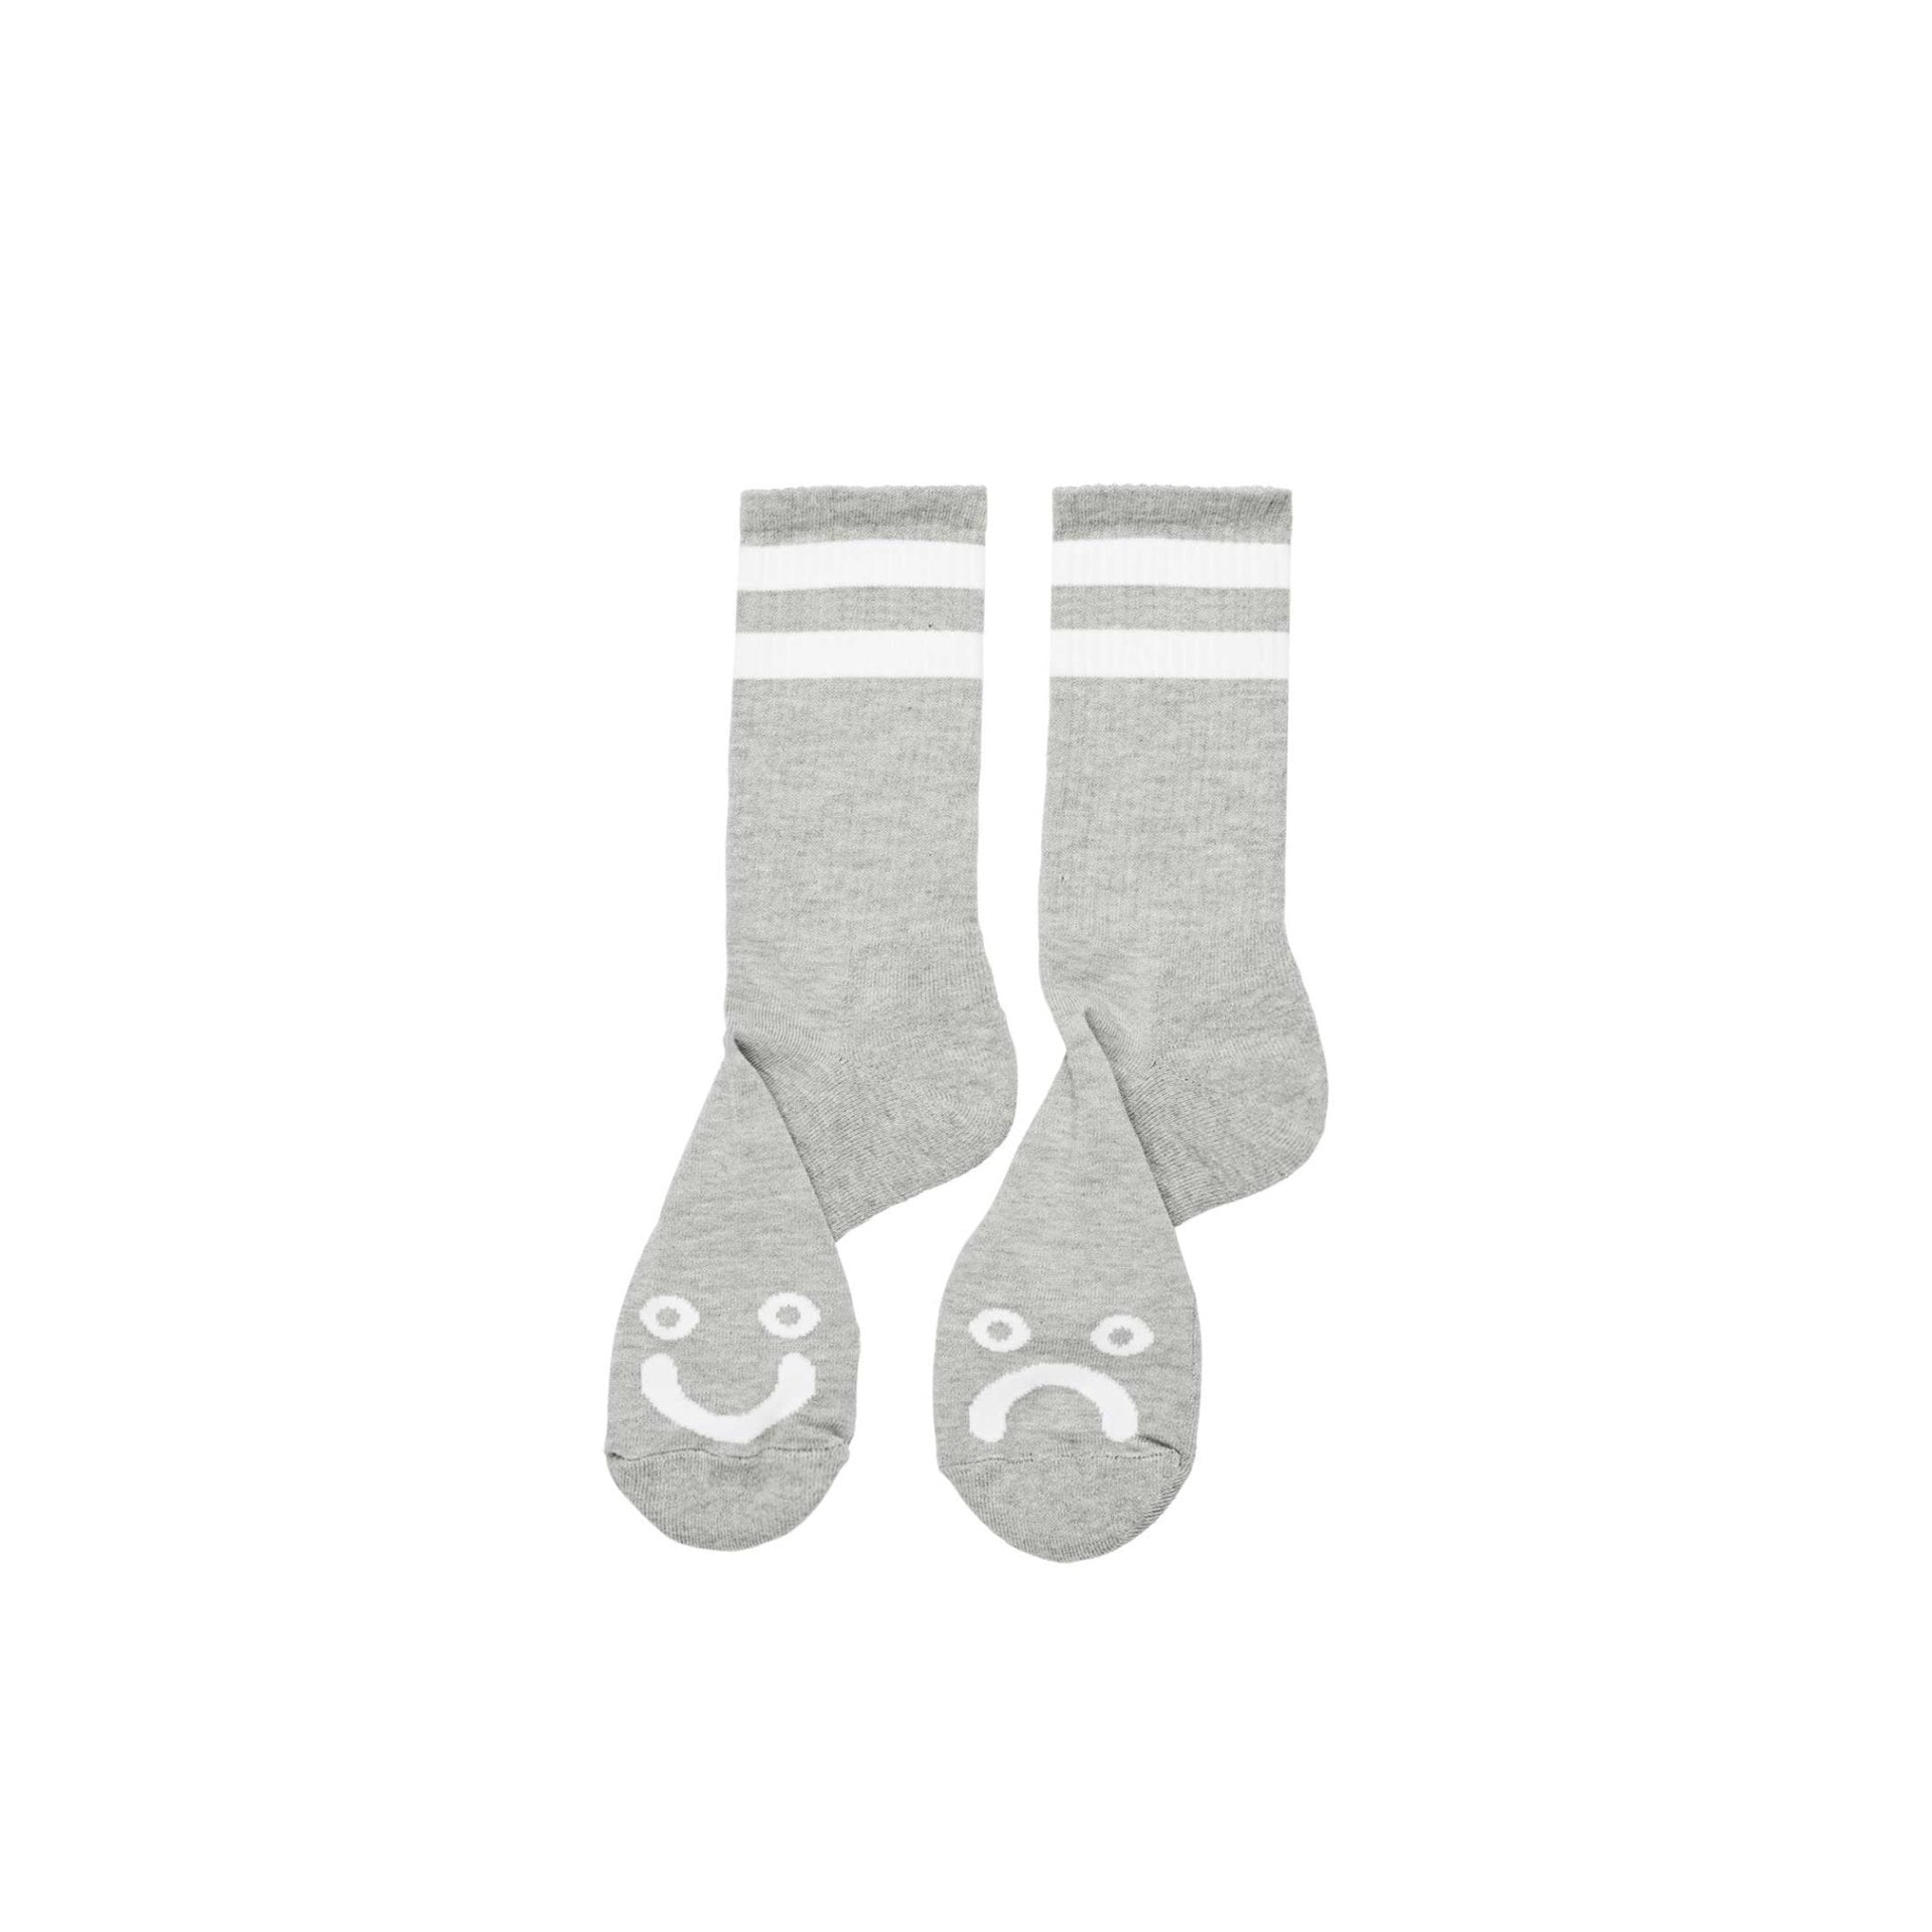 Polar Happy Sad socks, heather grey, heather grey - Tiki Room Skateboards - 1